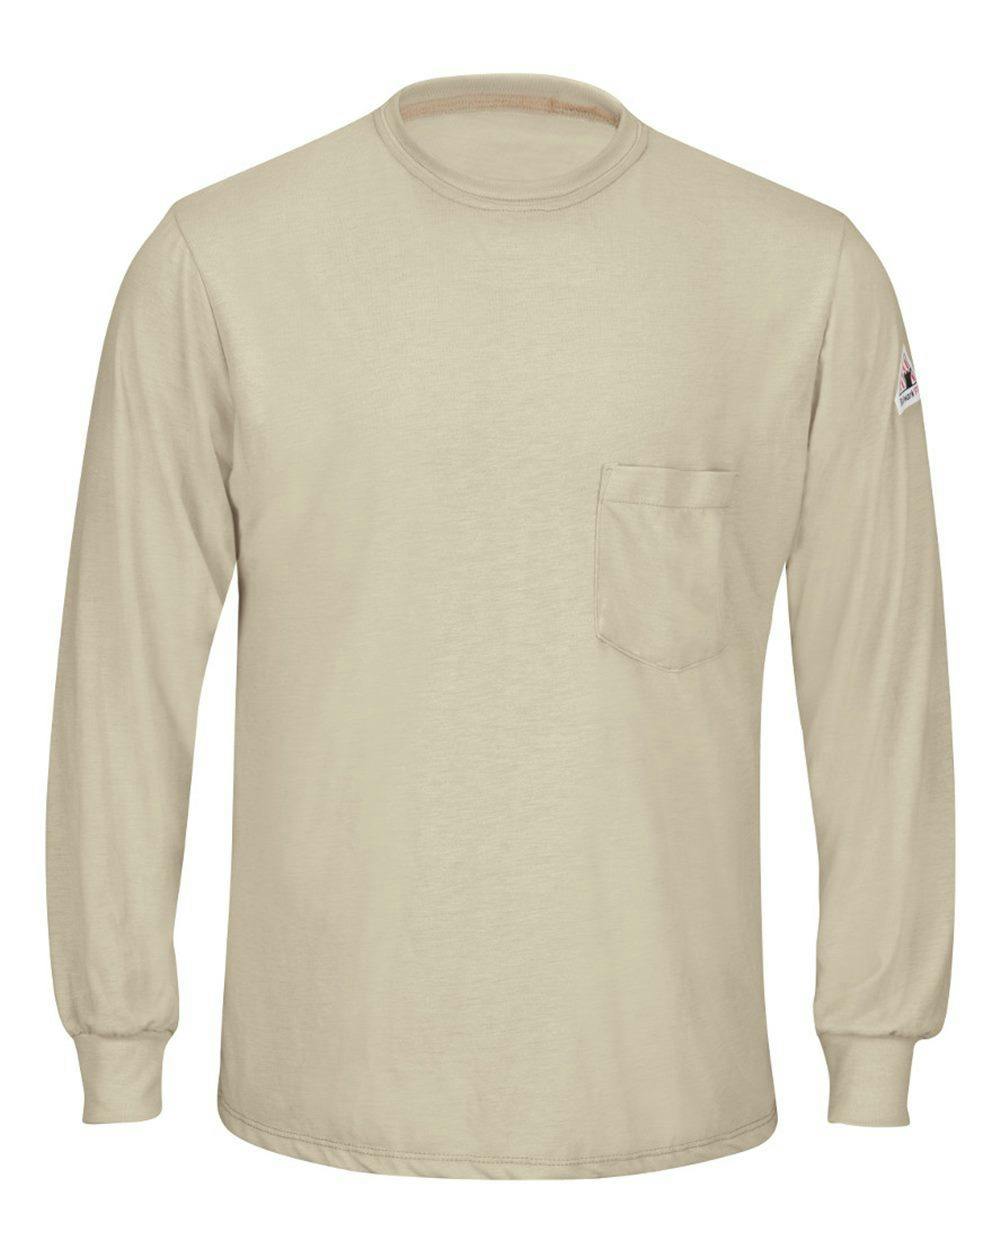 Image for Long Sleeve Lightweight T-Shirt - SMT8